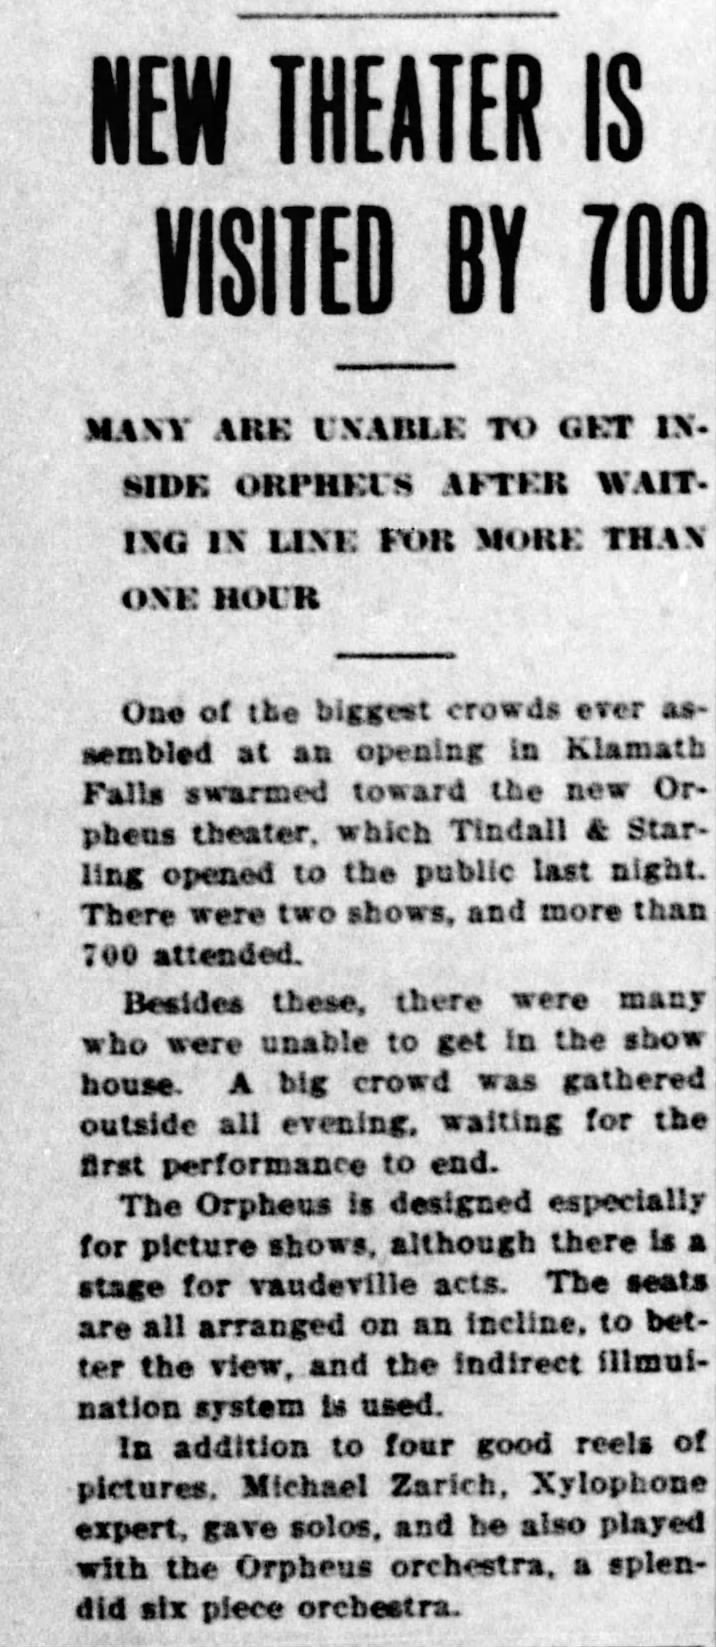 Orpheus theater opening night, June 1914